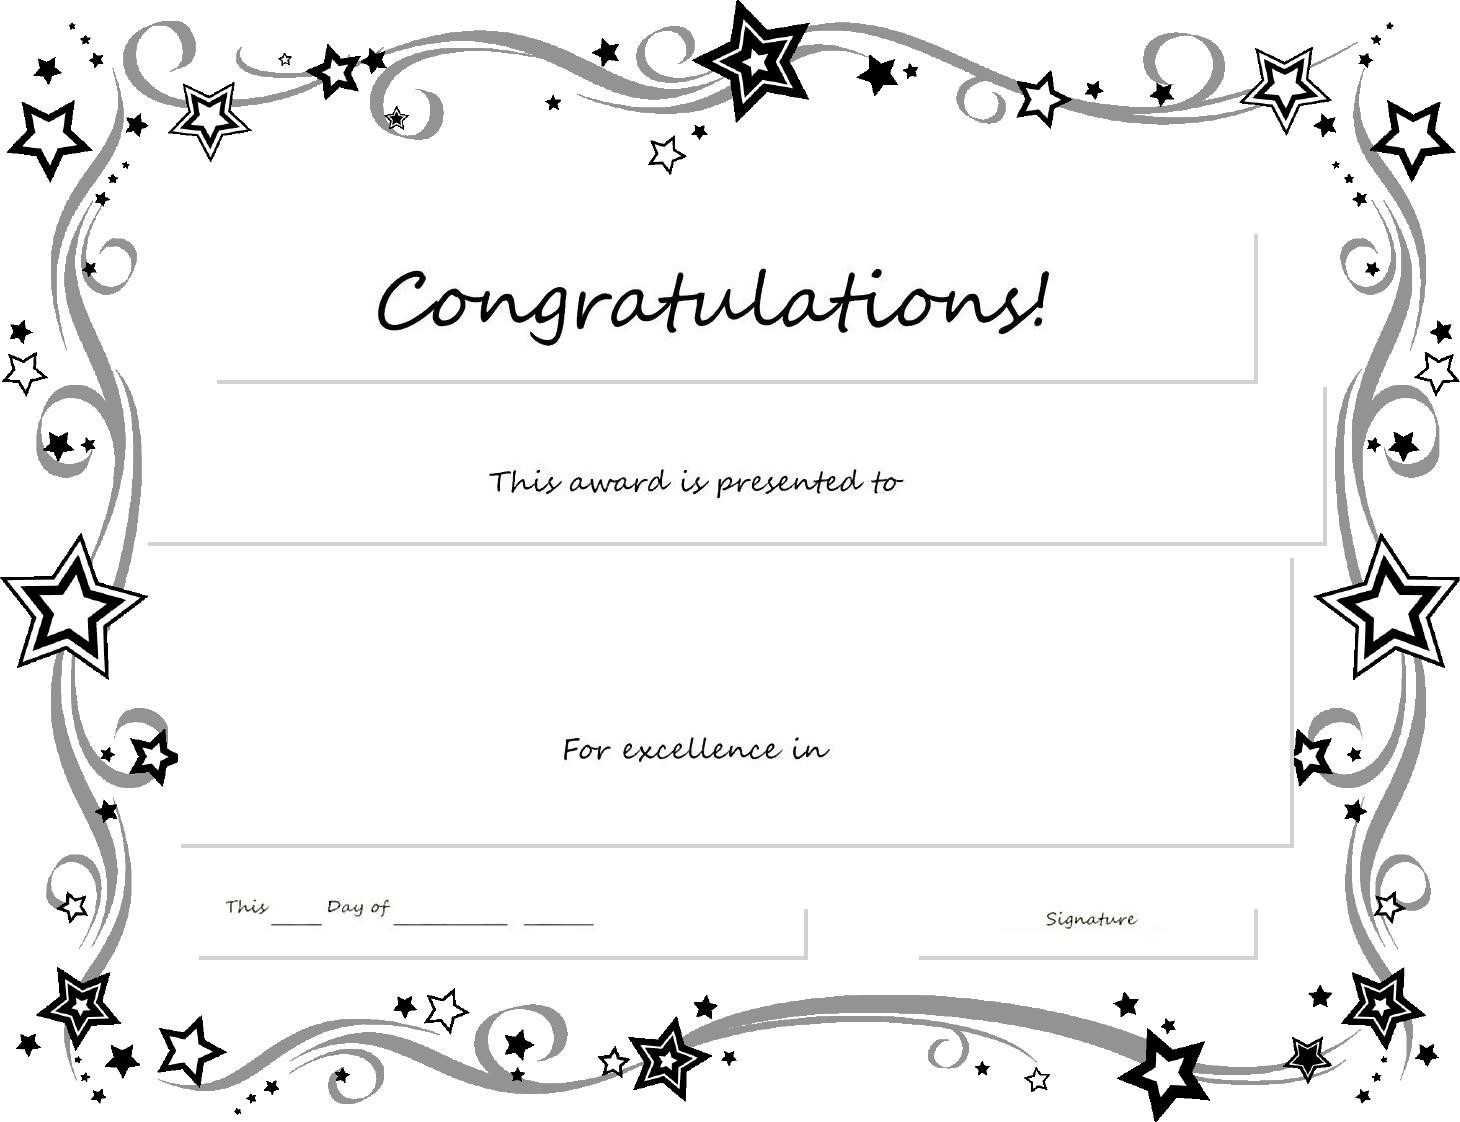 Congratulations Certificate Word Template - Erieairfair With With Congratulations Certificate Word Template